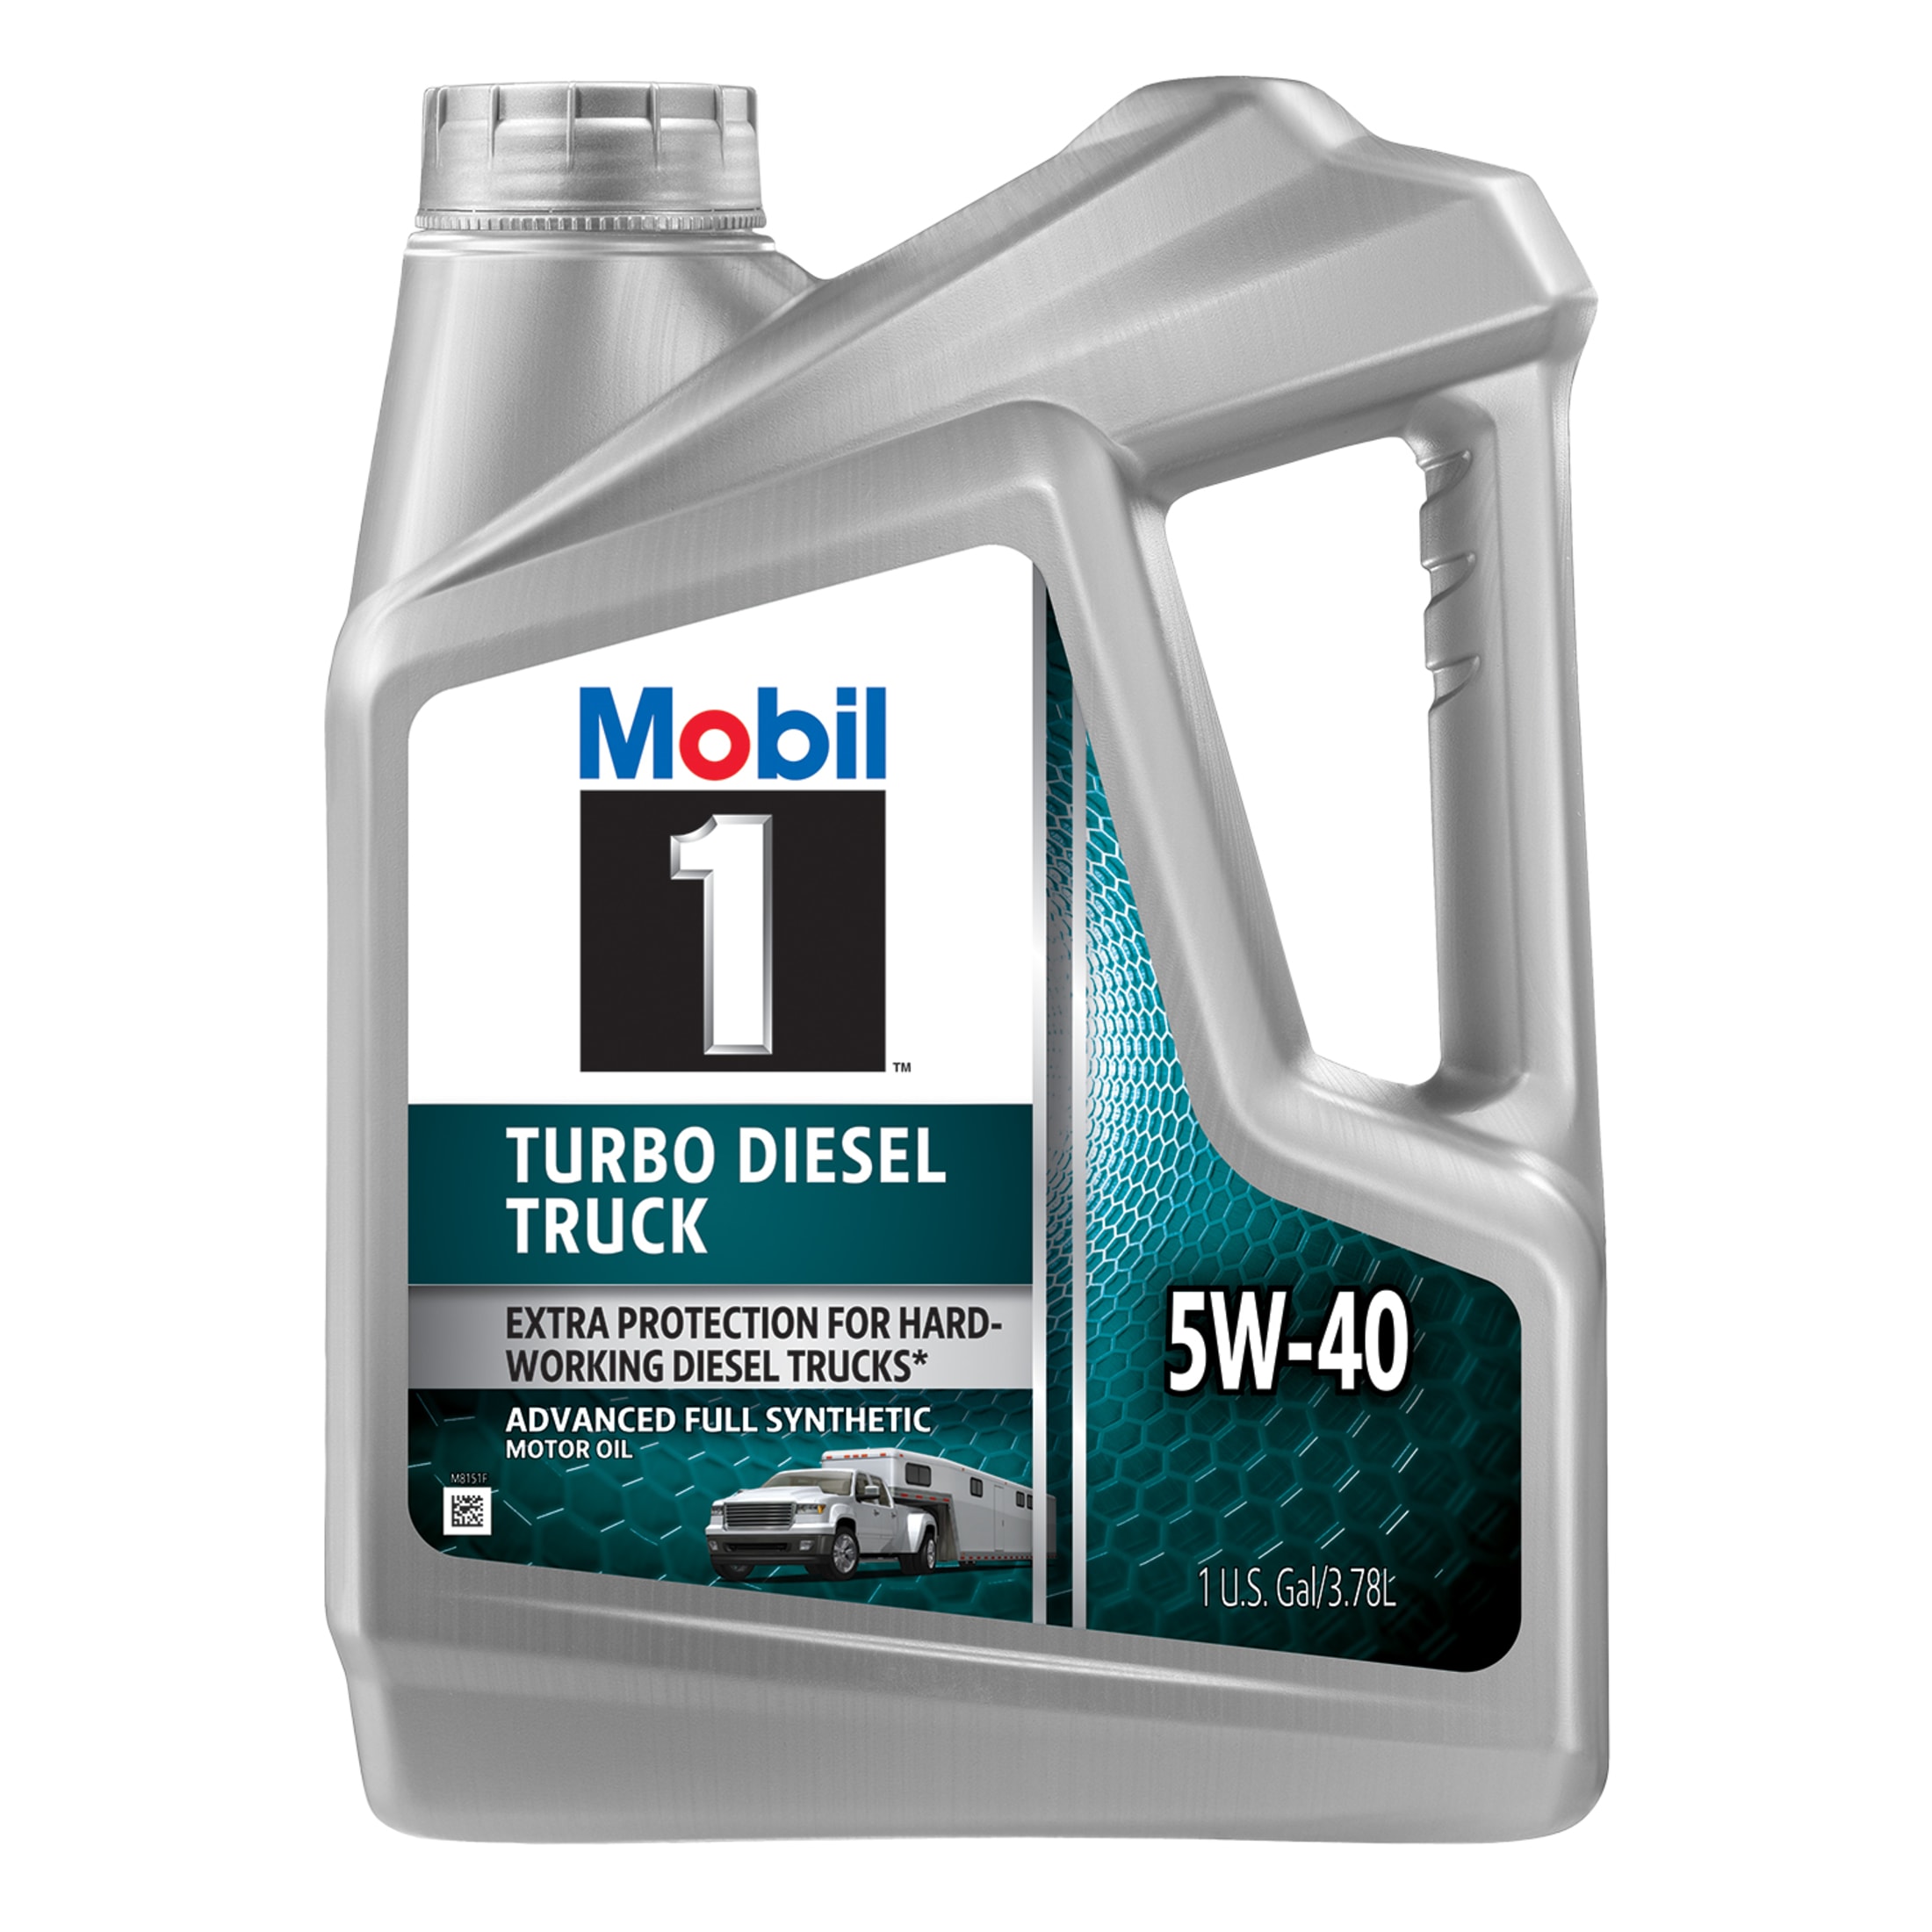 Mobil 1 Turbo Diesel Truck Full Synthetic Motor Oil 5W-40, 1 Gallon - image 1 of 8